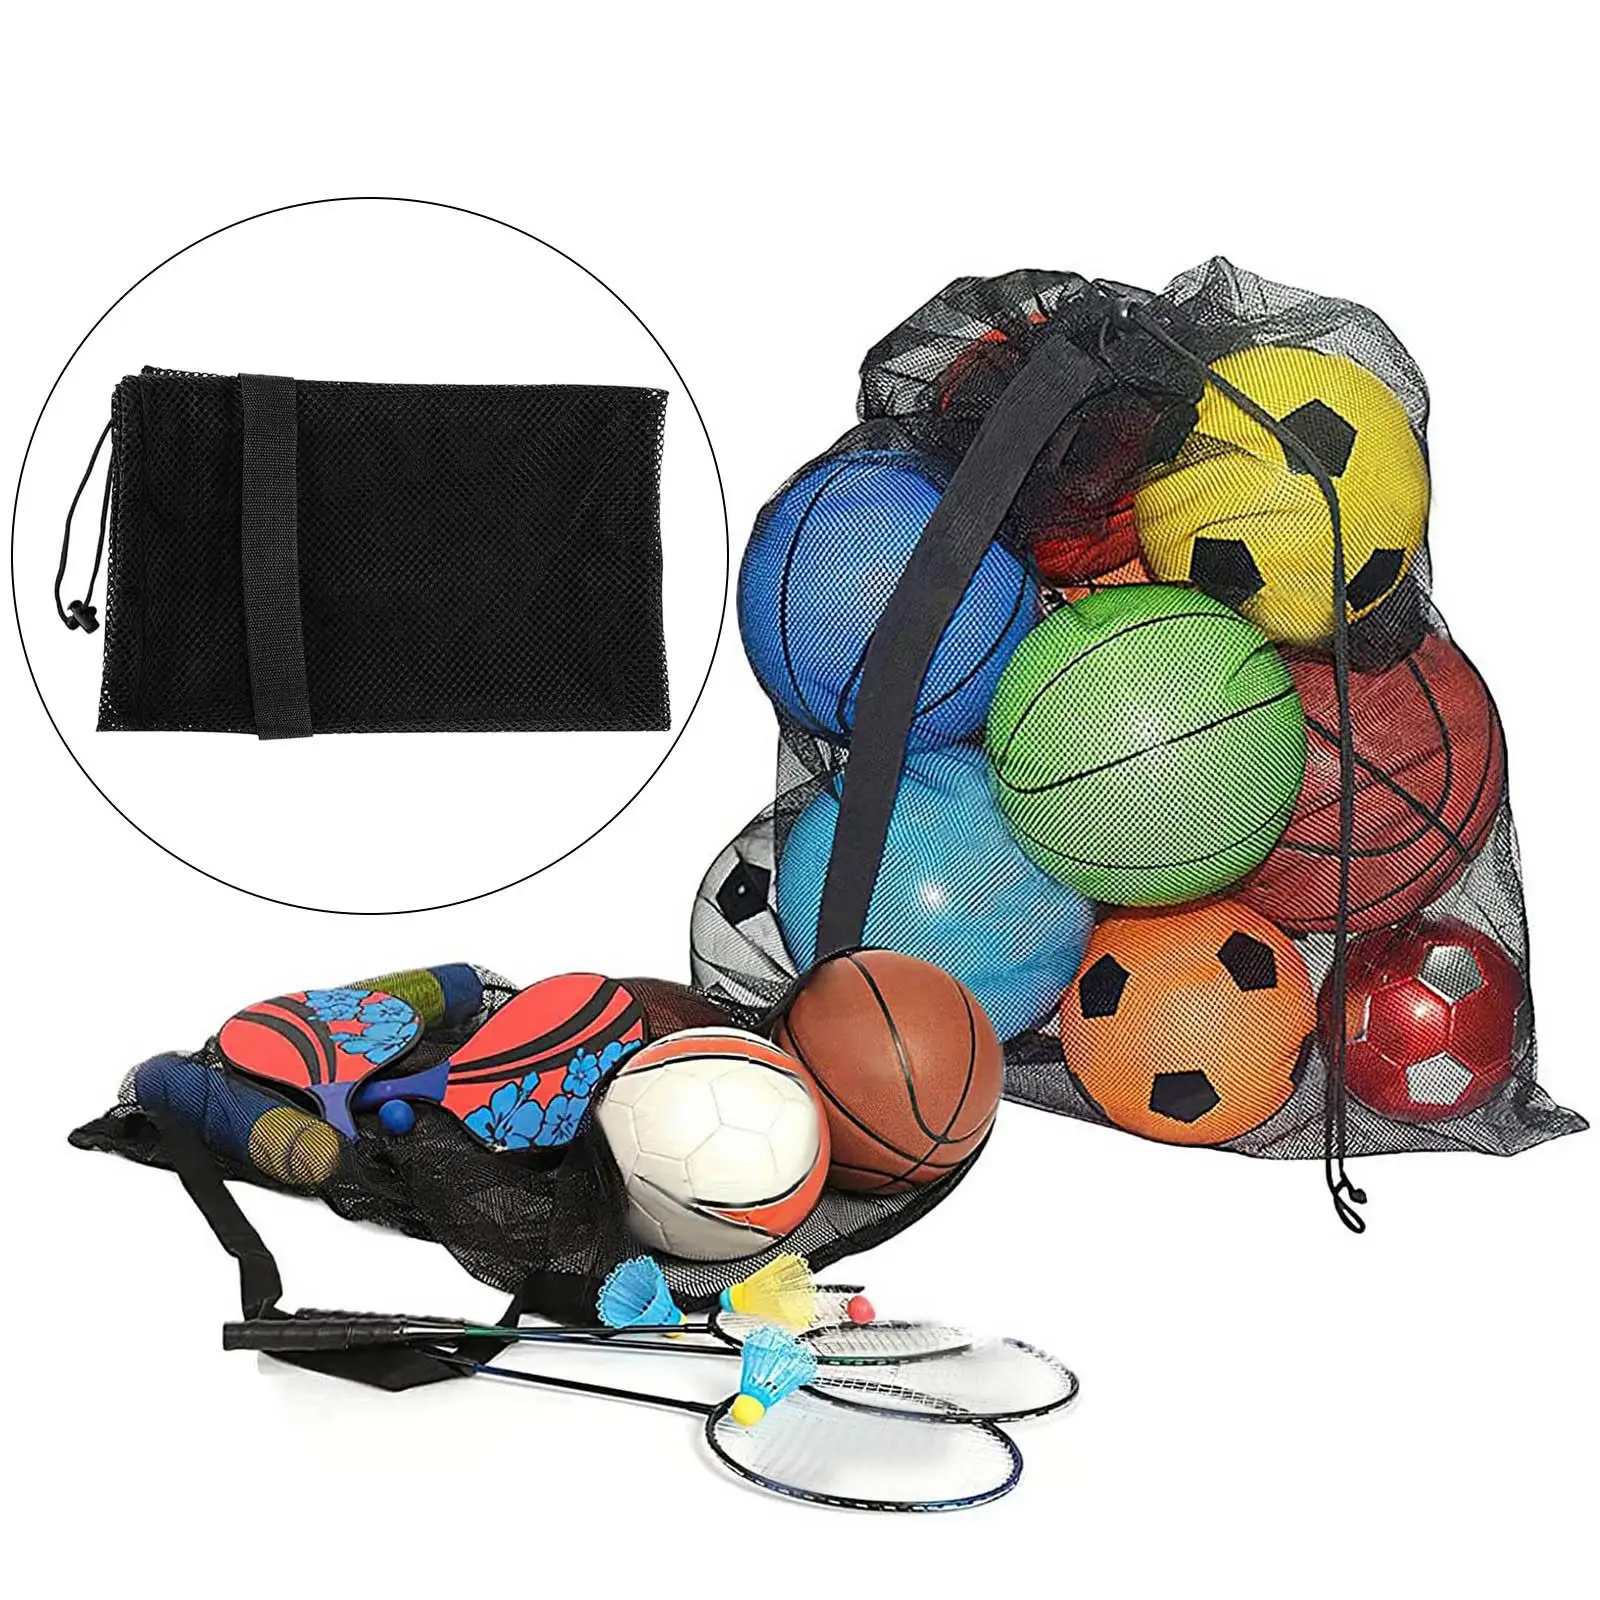 Mesh Ball Bag Drawstring gym exercise Equipment Storage Heavy Duty Nets Bag for Soccer Sports